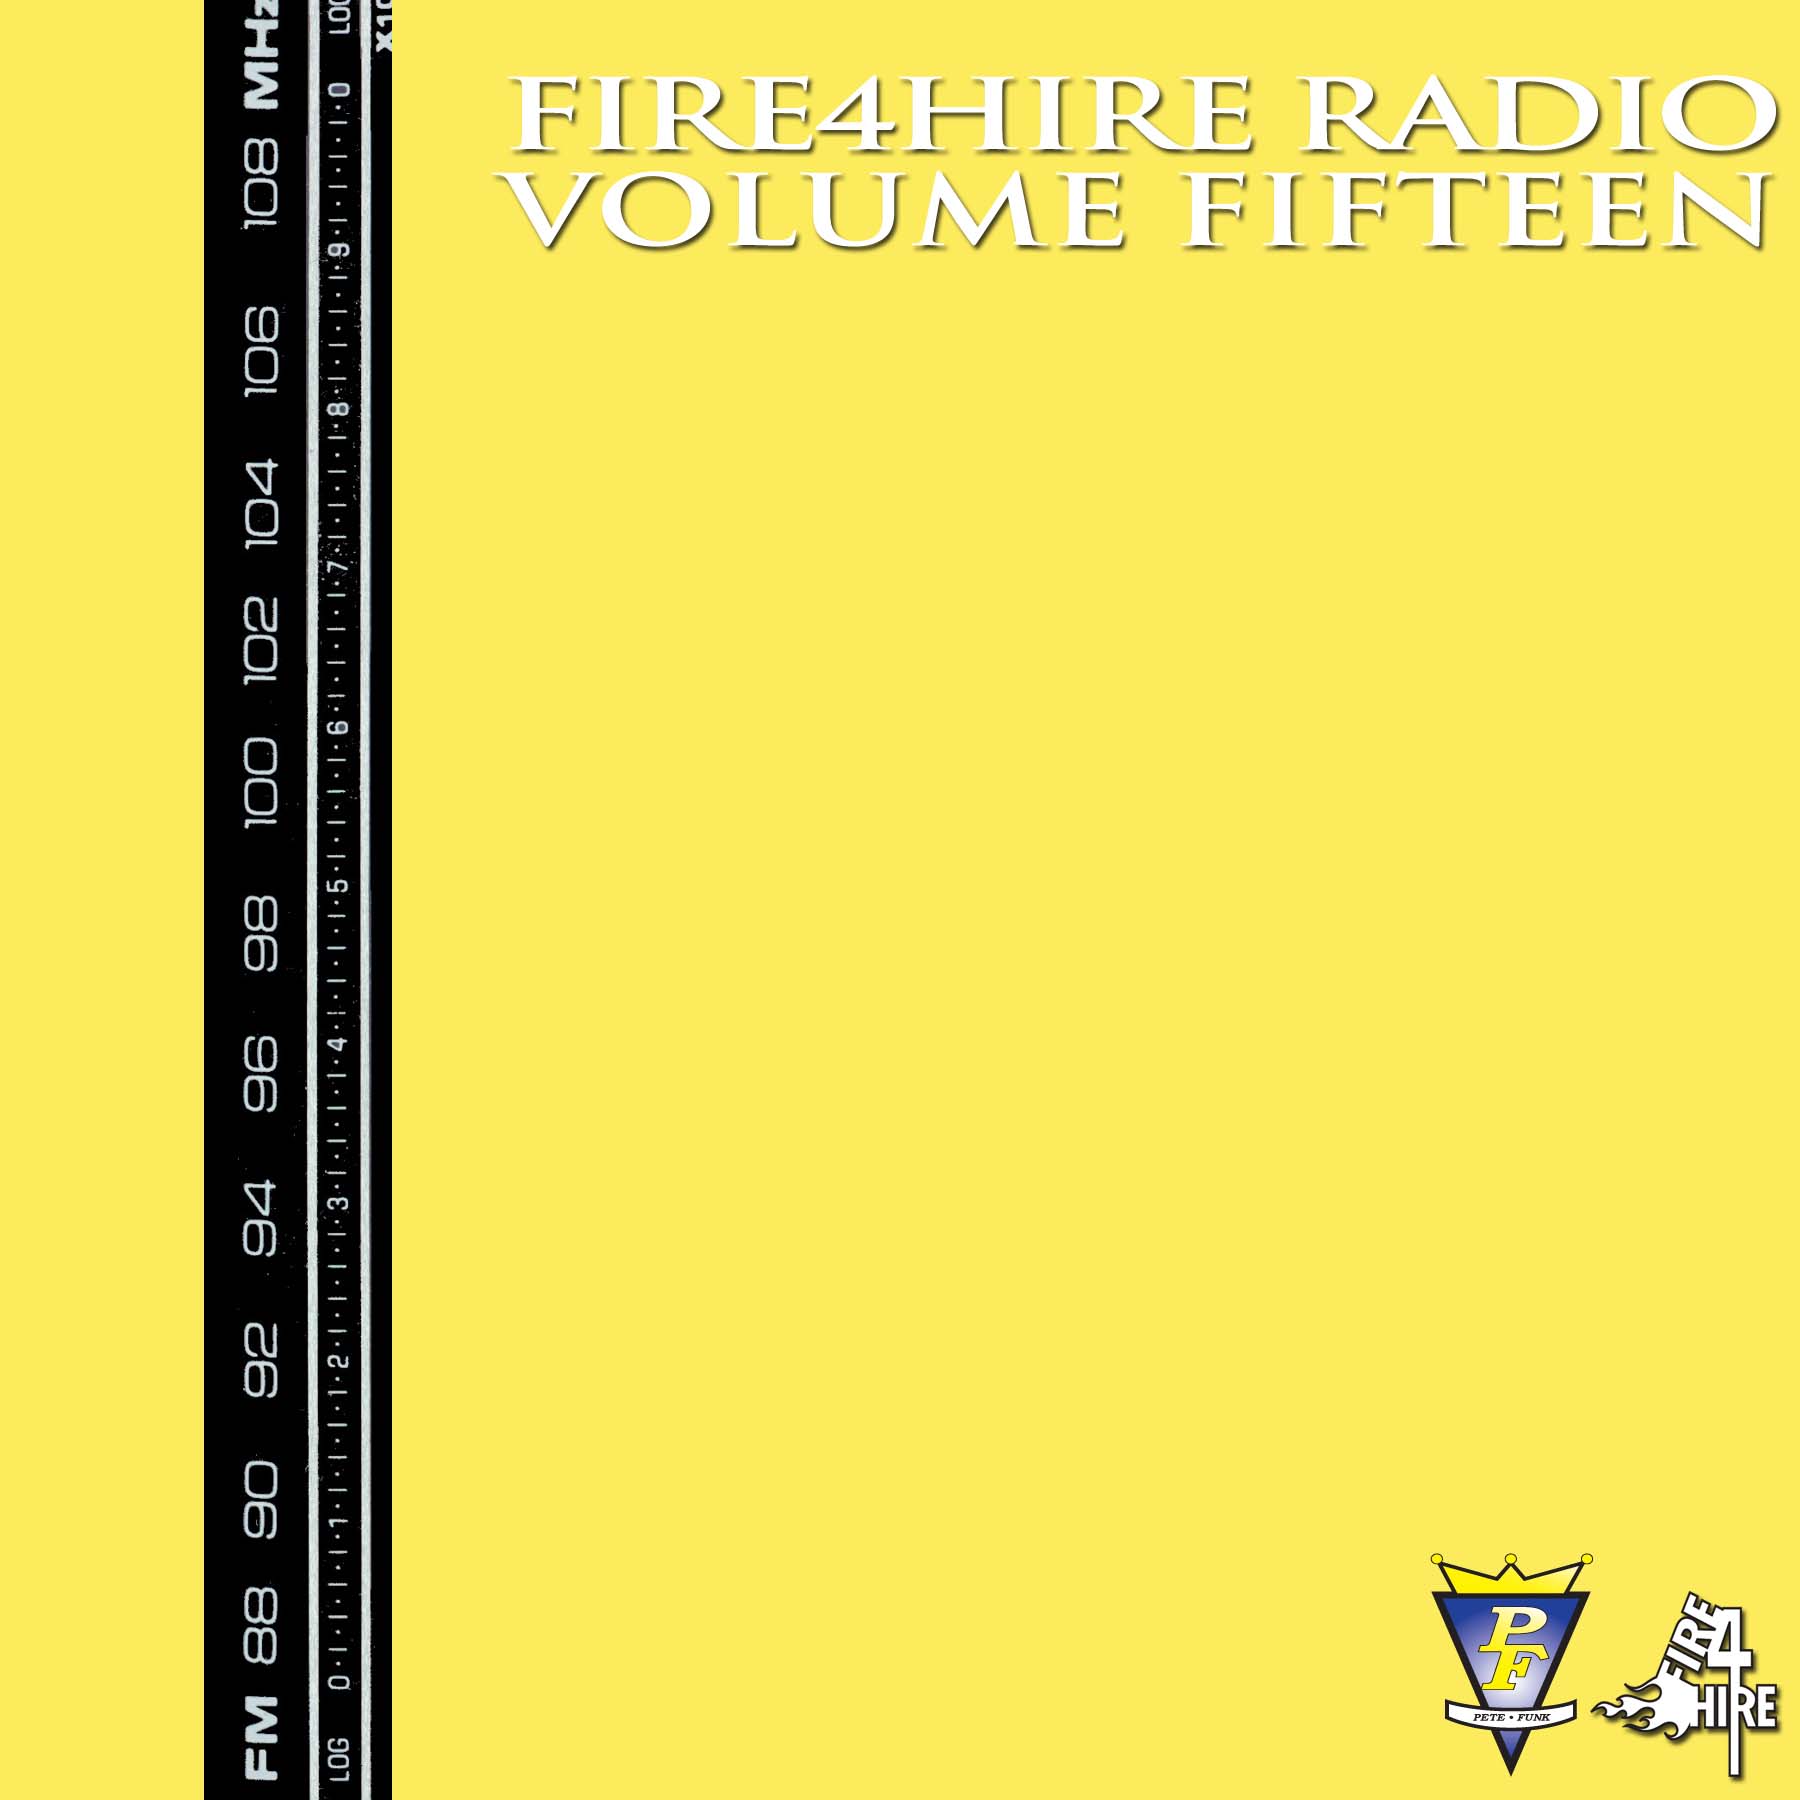 Pete FUnk Fire 4 Hire Soundsystem Radio Mixtape